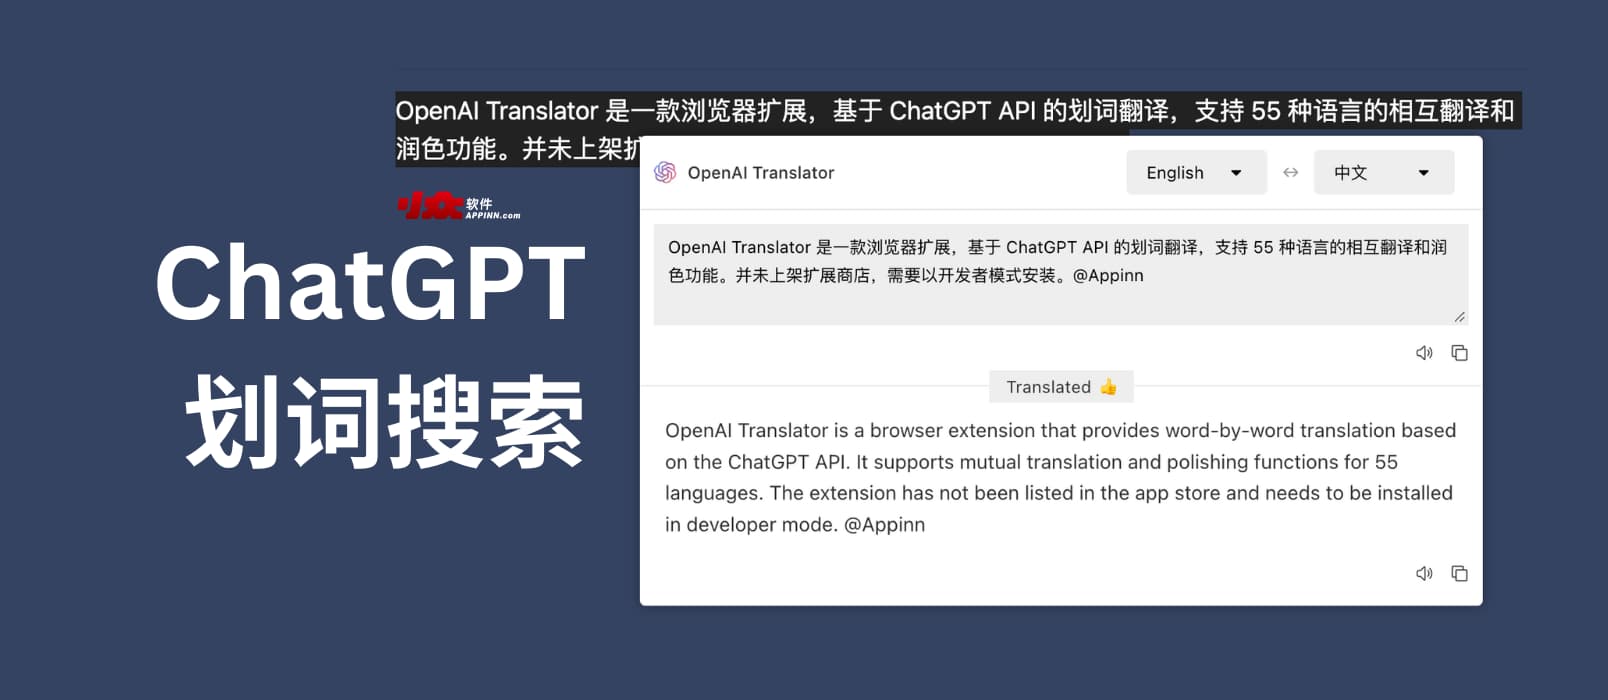 OpenAI Translator - 基于 ChatGPT API 的划词翻译，55 种语言互译[Chrome]